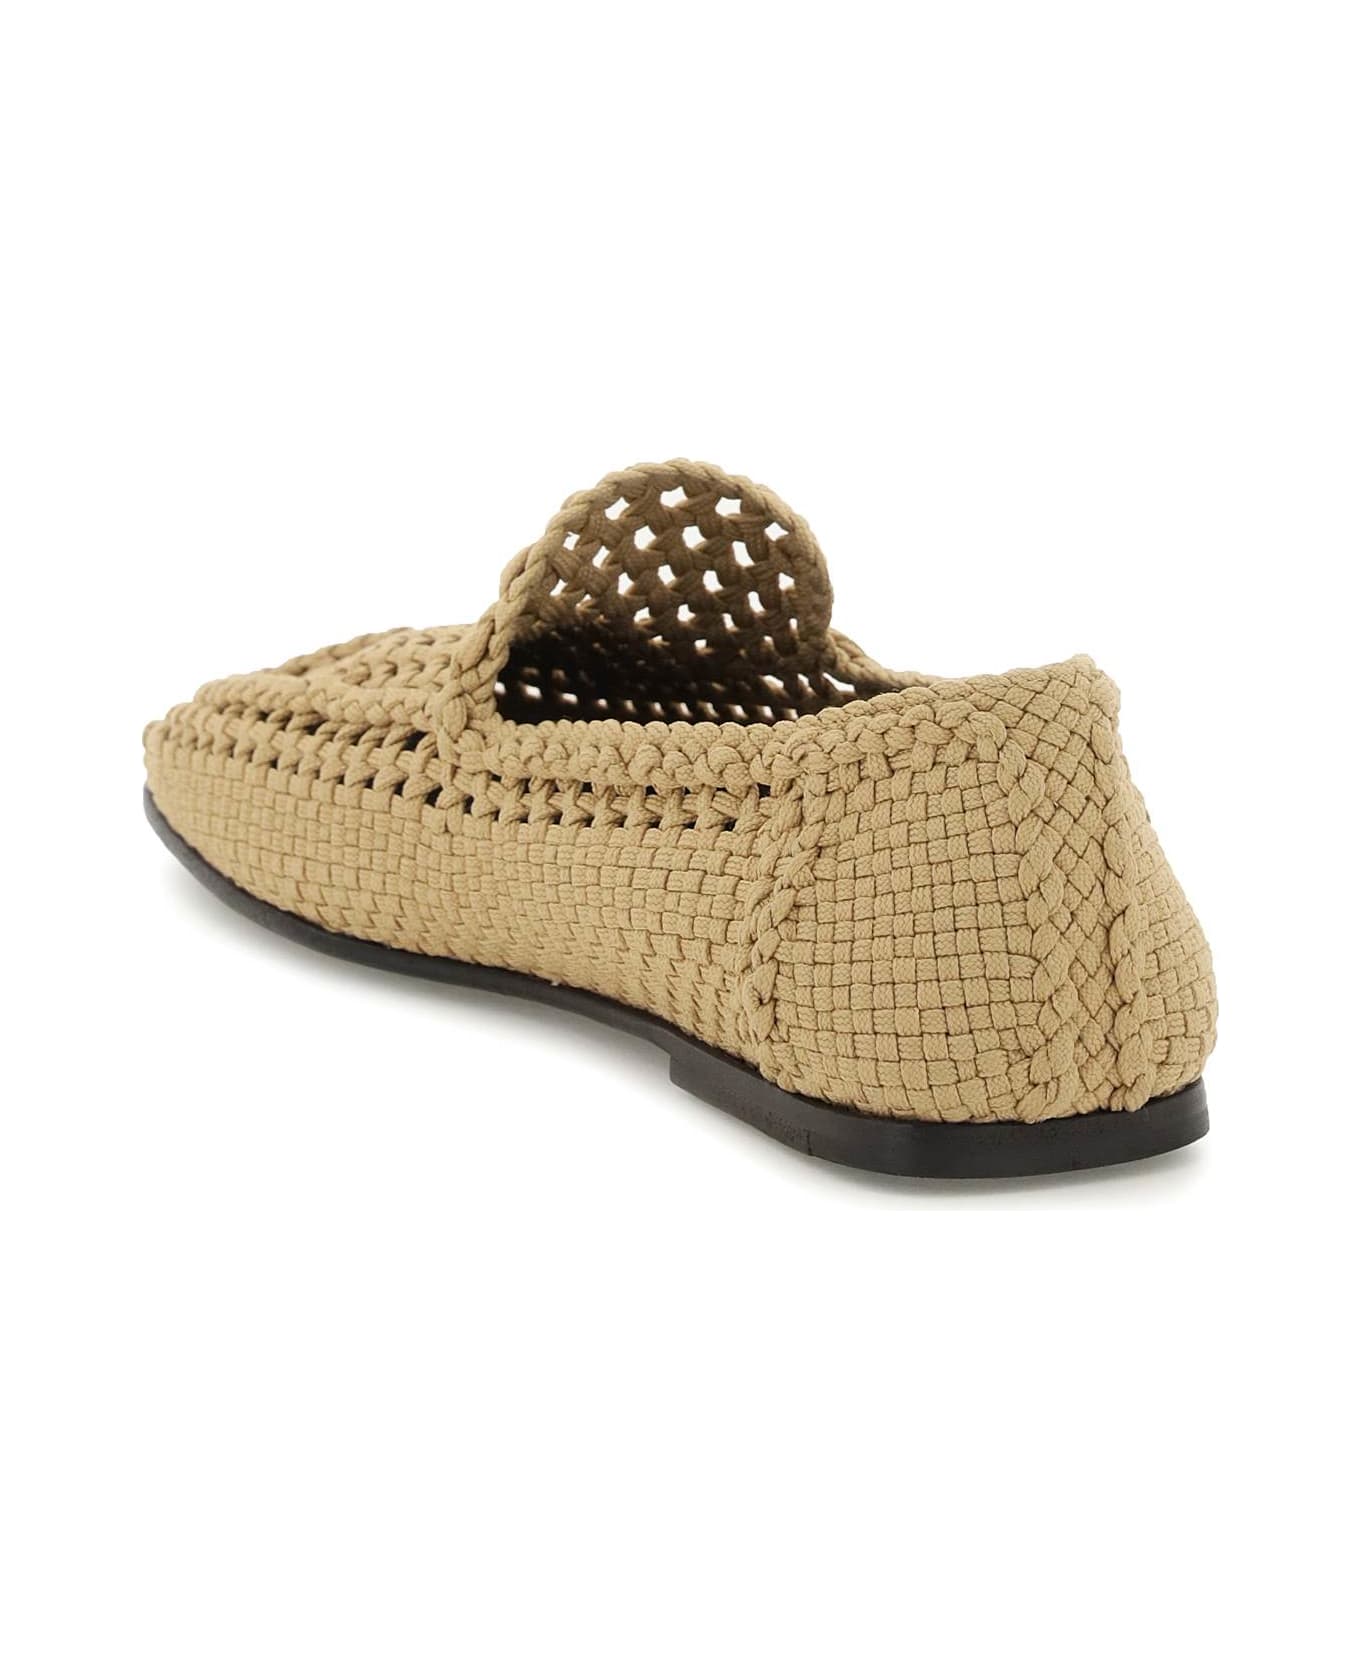 Dolce & Gabbana Crocheted Loafers - Beige